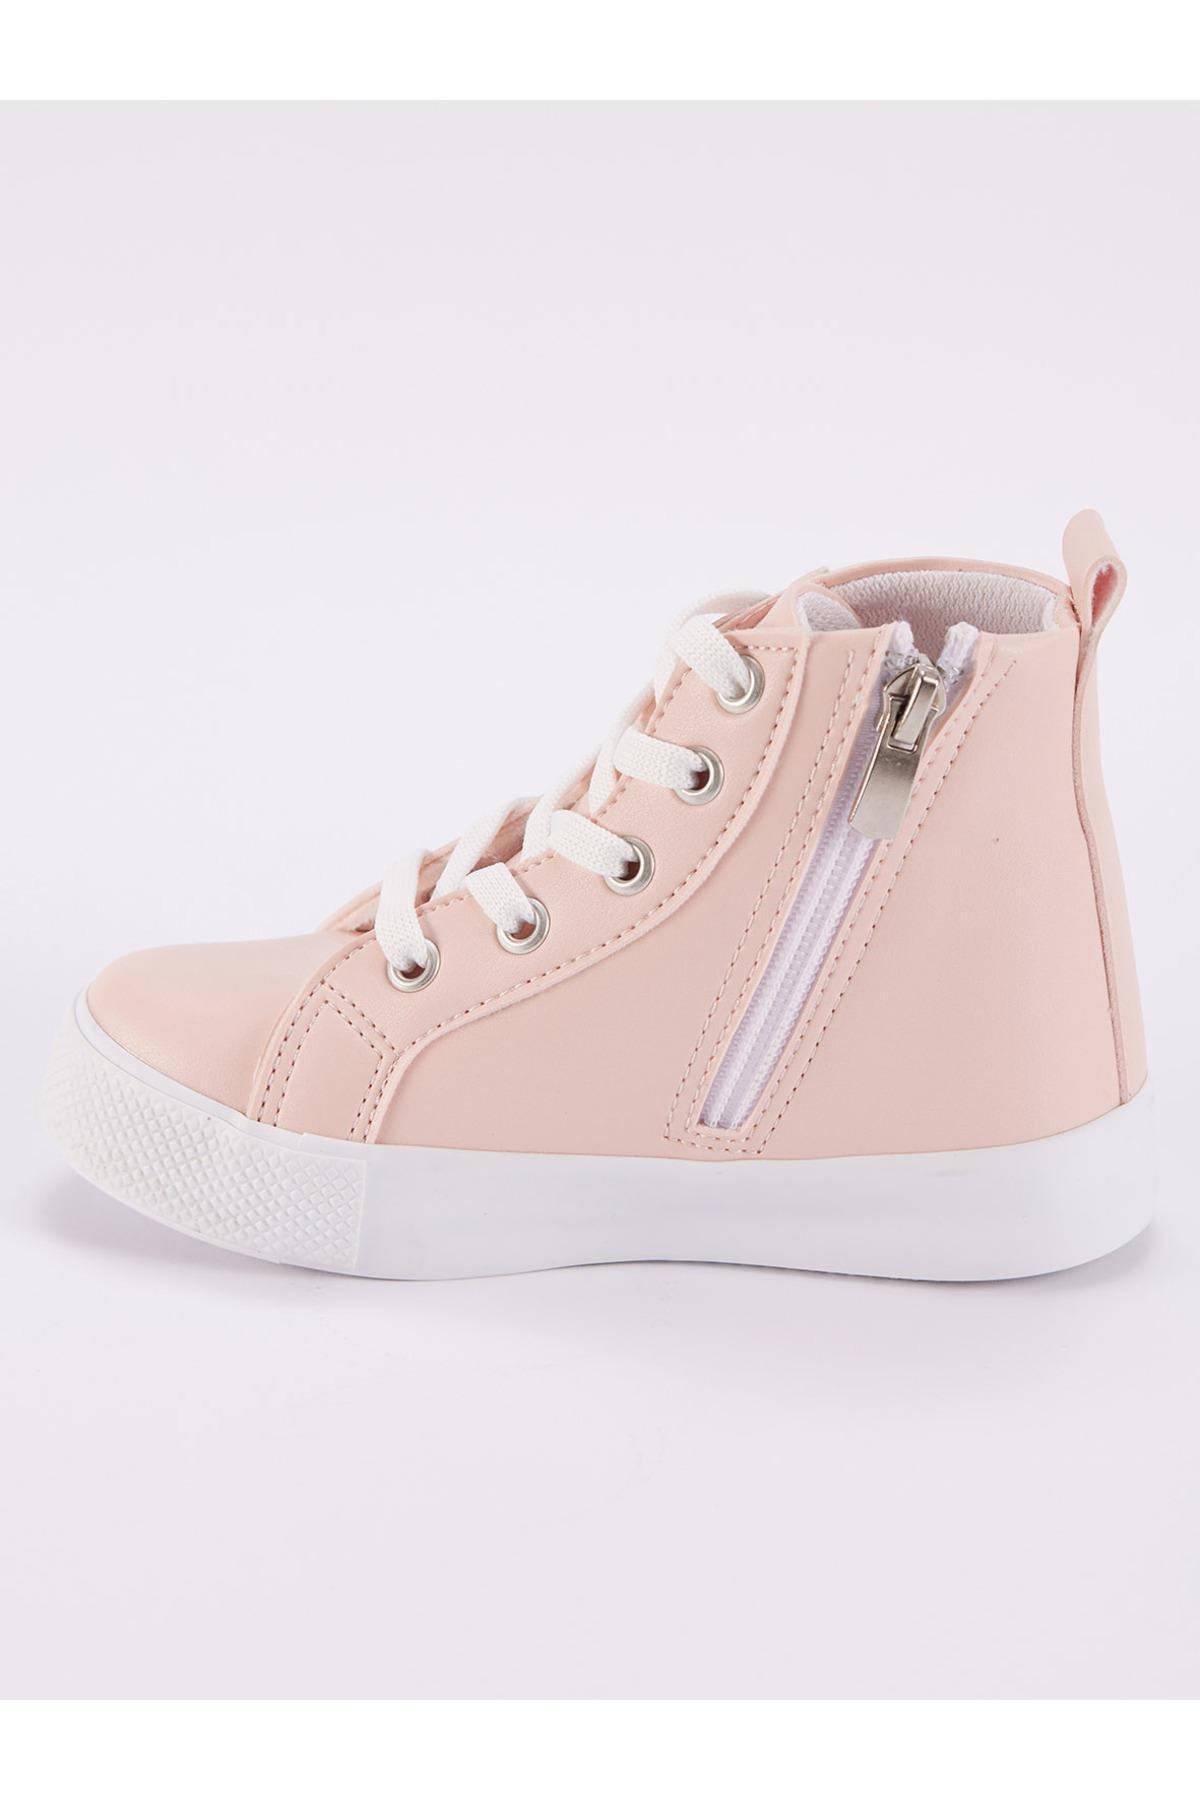 Denokids - Pink Patterned High Sneakers, Kids Girls